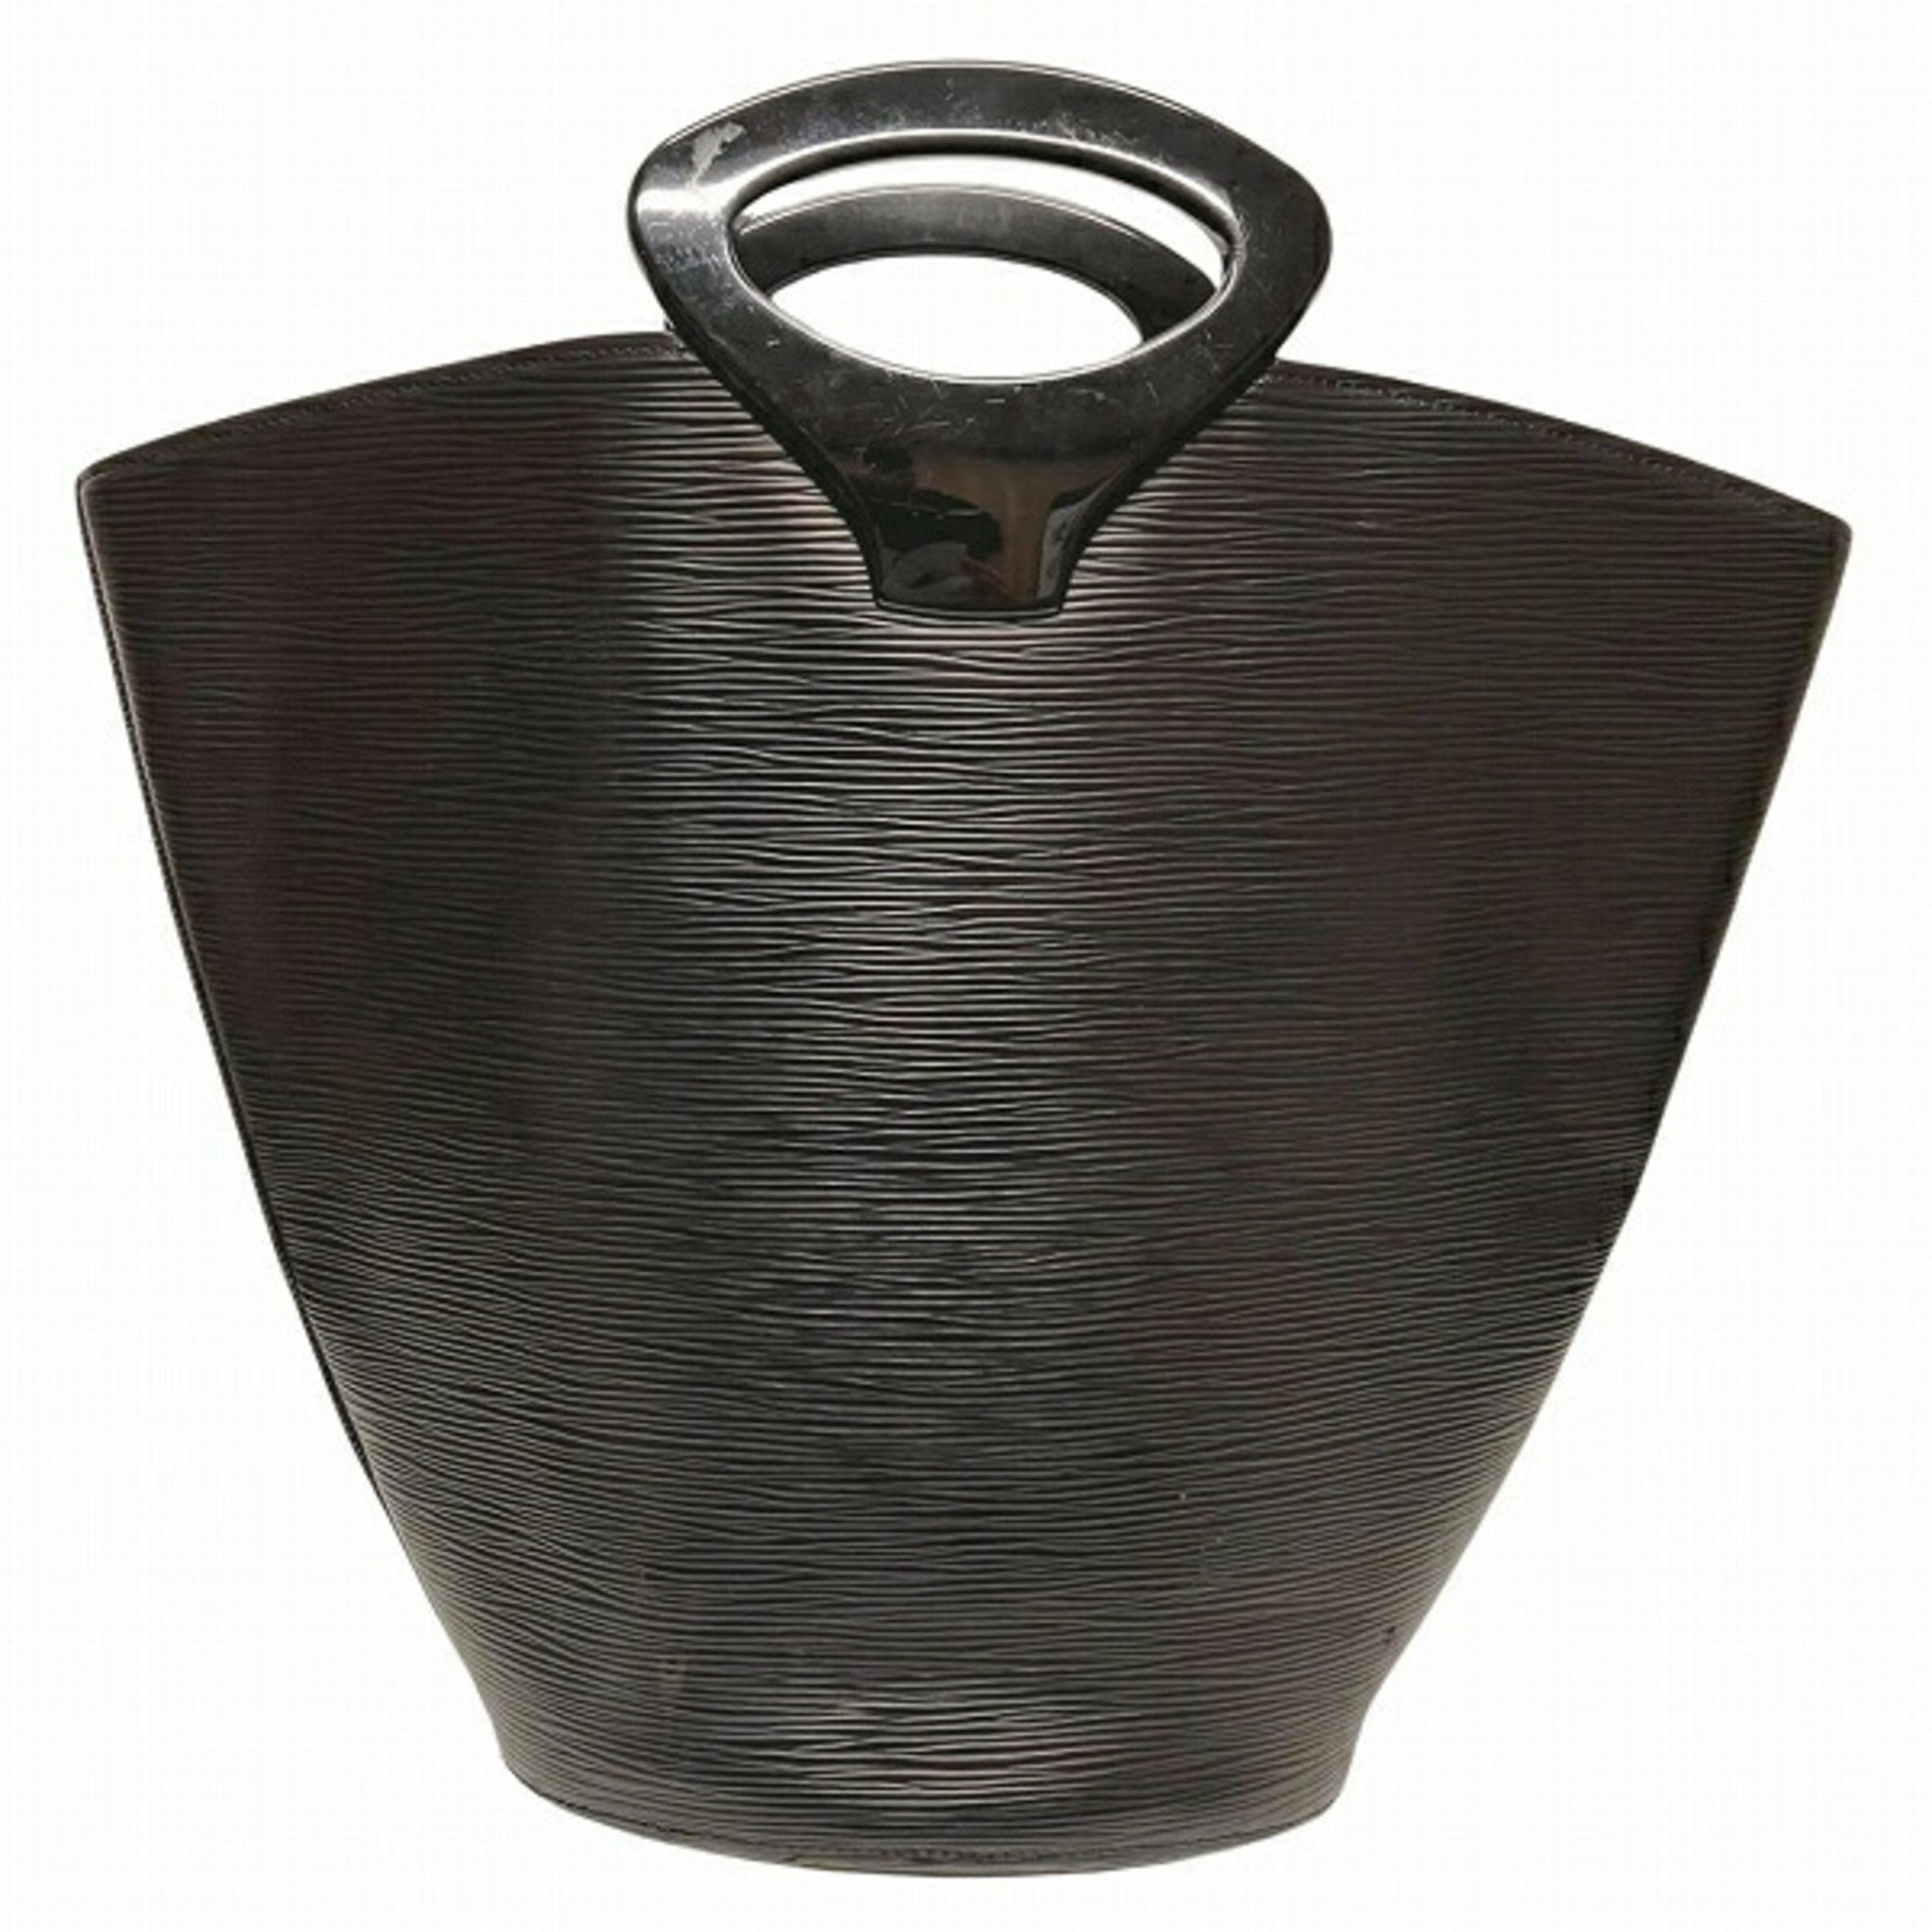 Louis Vuitton Epi Noctamble M54522 Bag Handbag Men Women